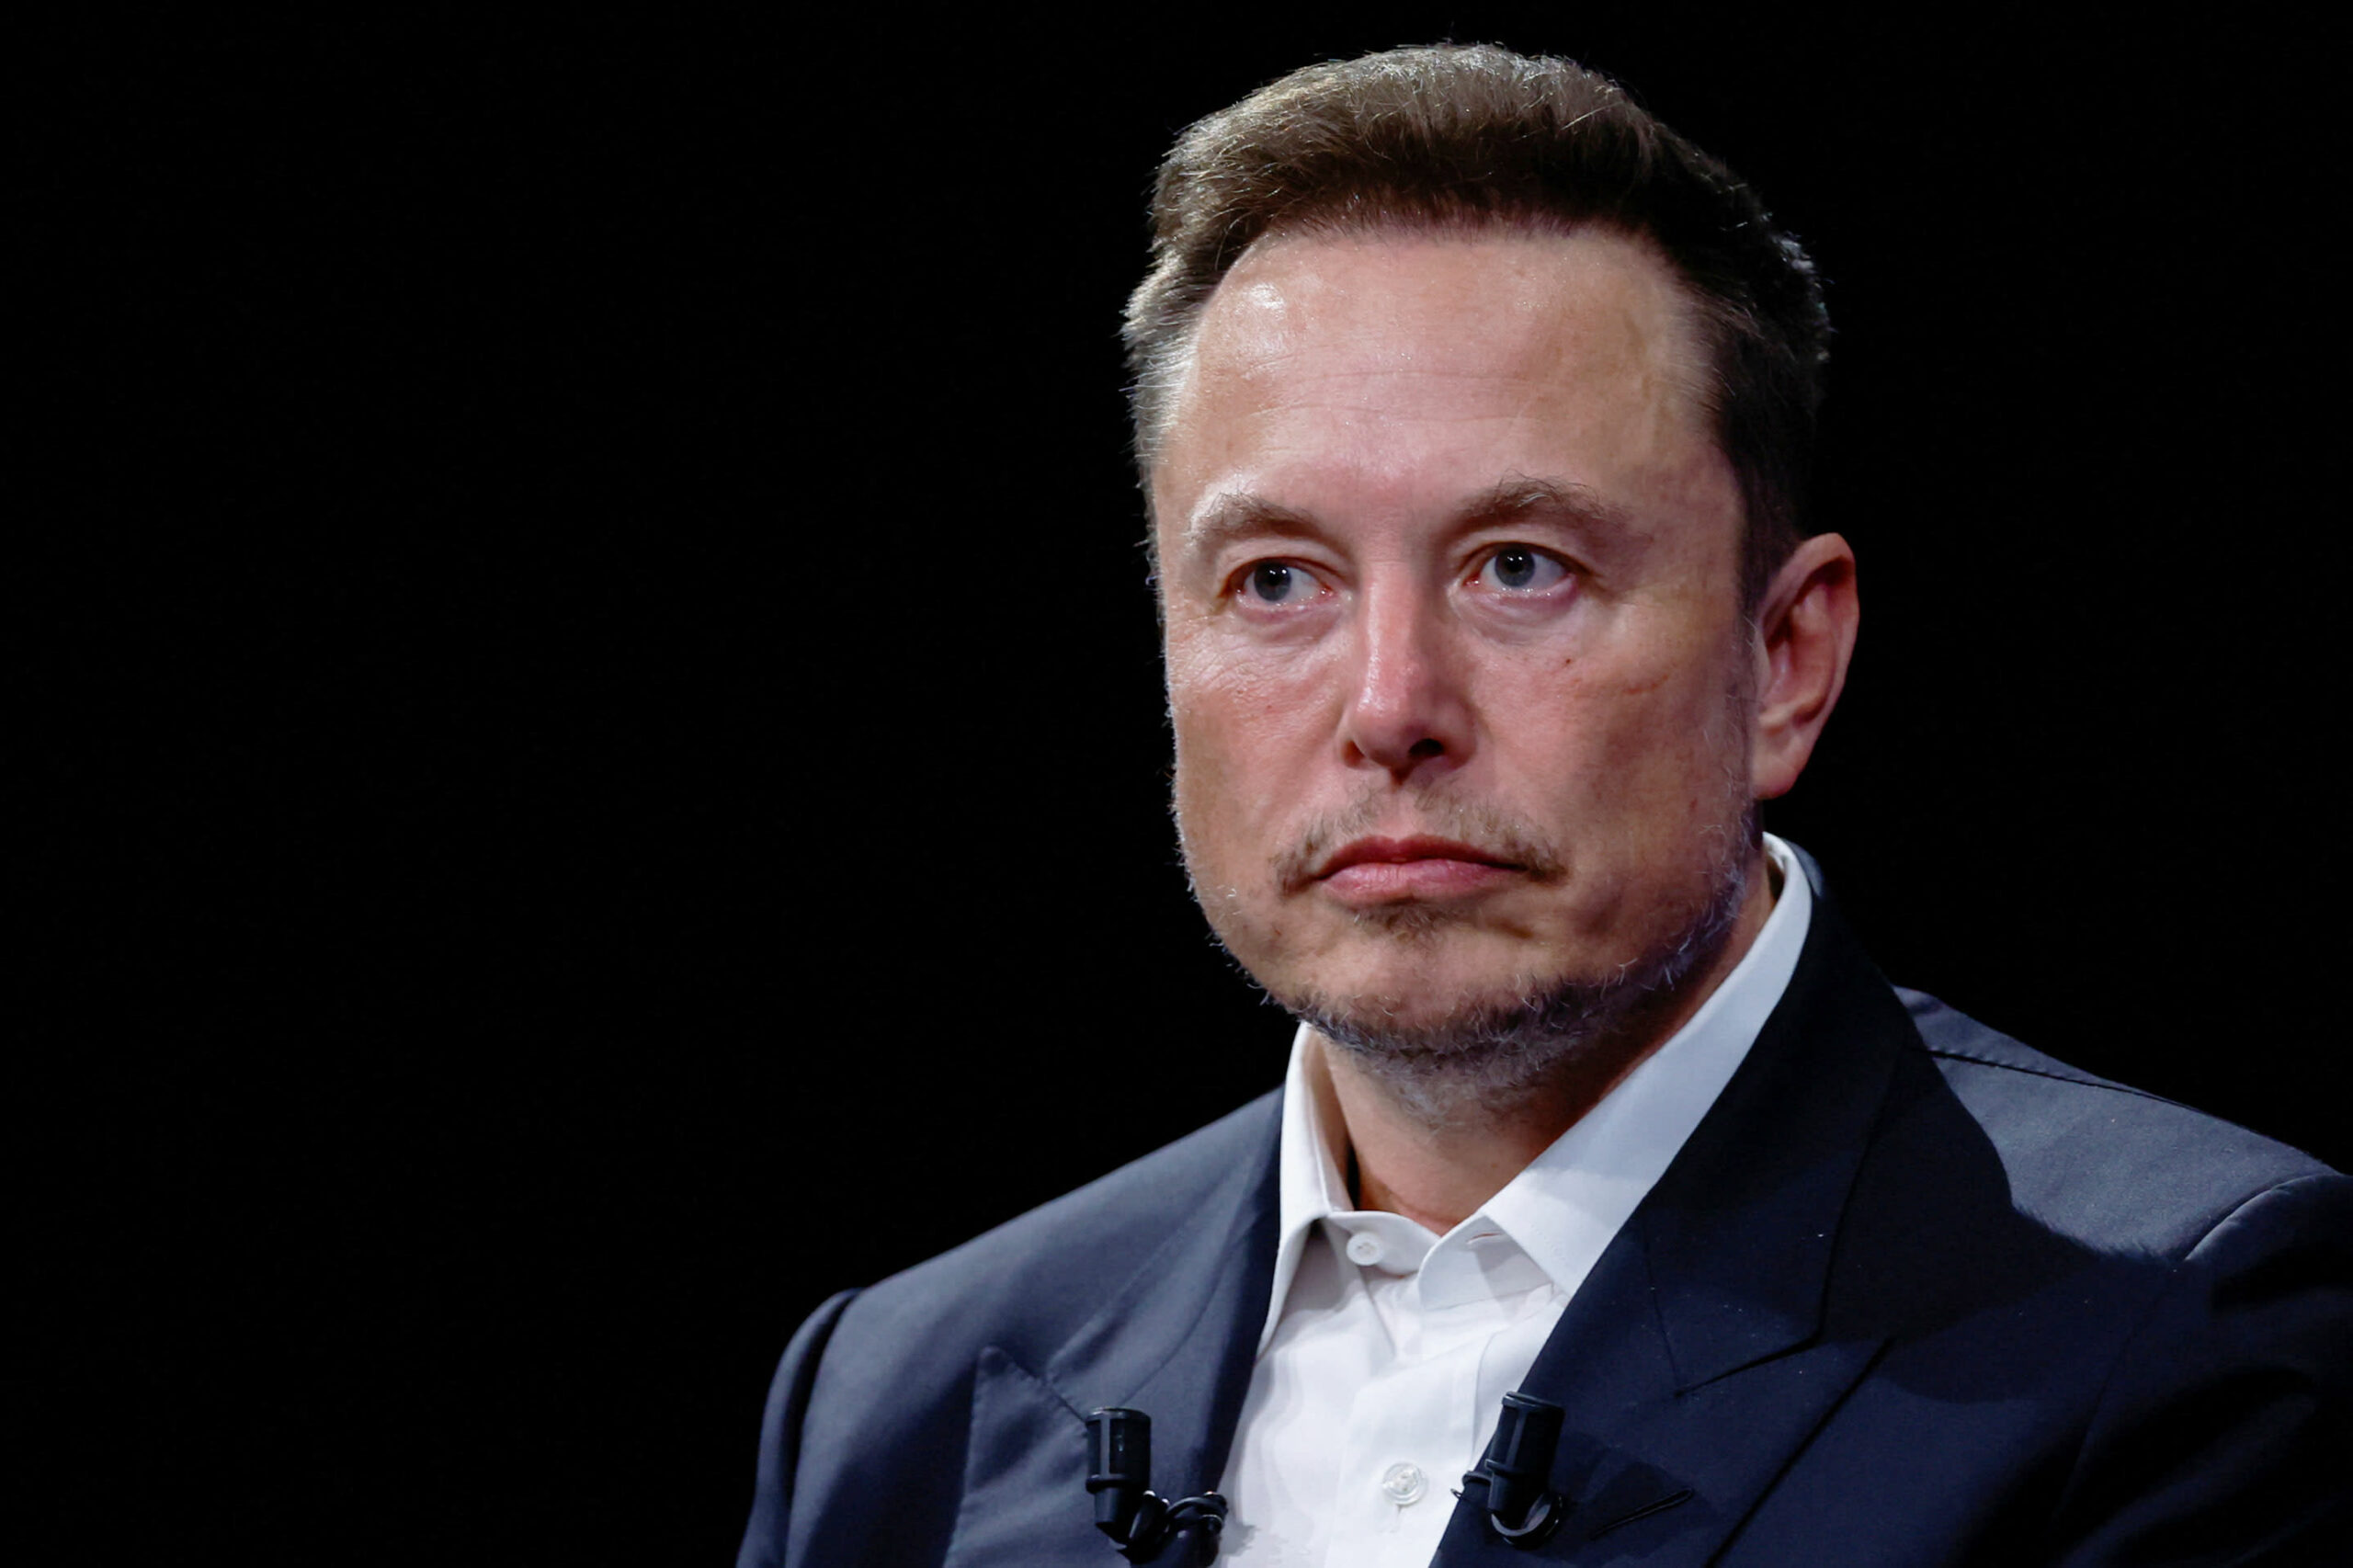 ¡Empresa demanda derechos de marca a X de Elon Musk!